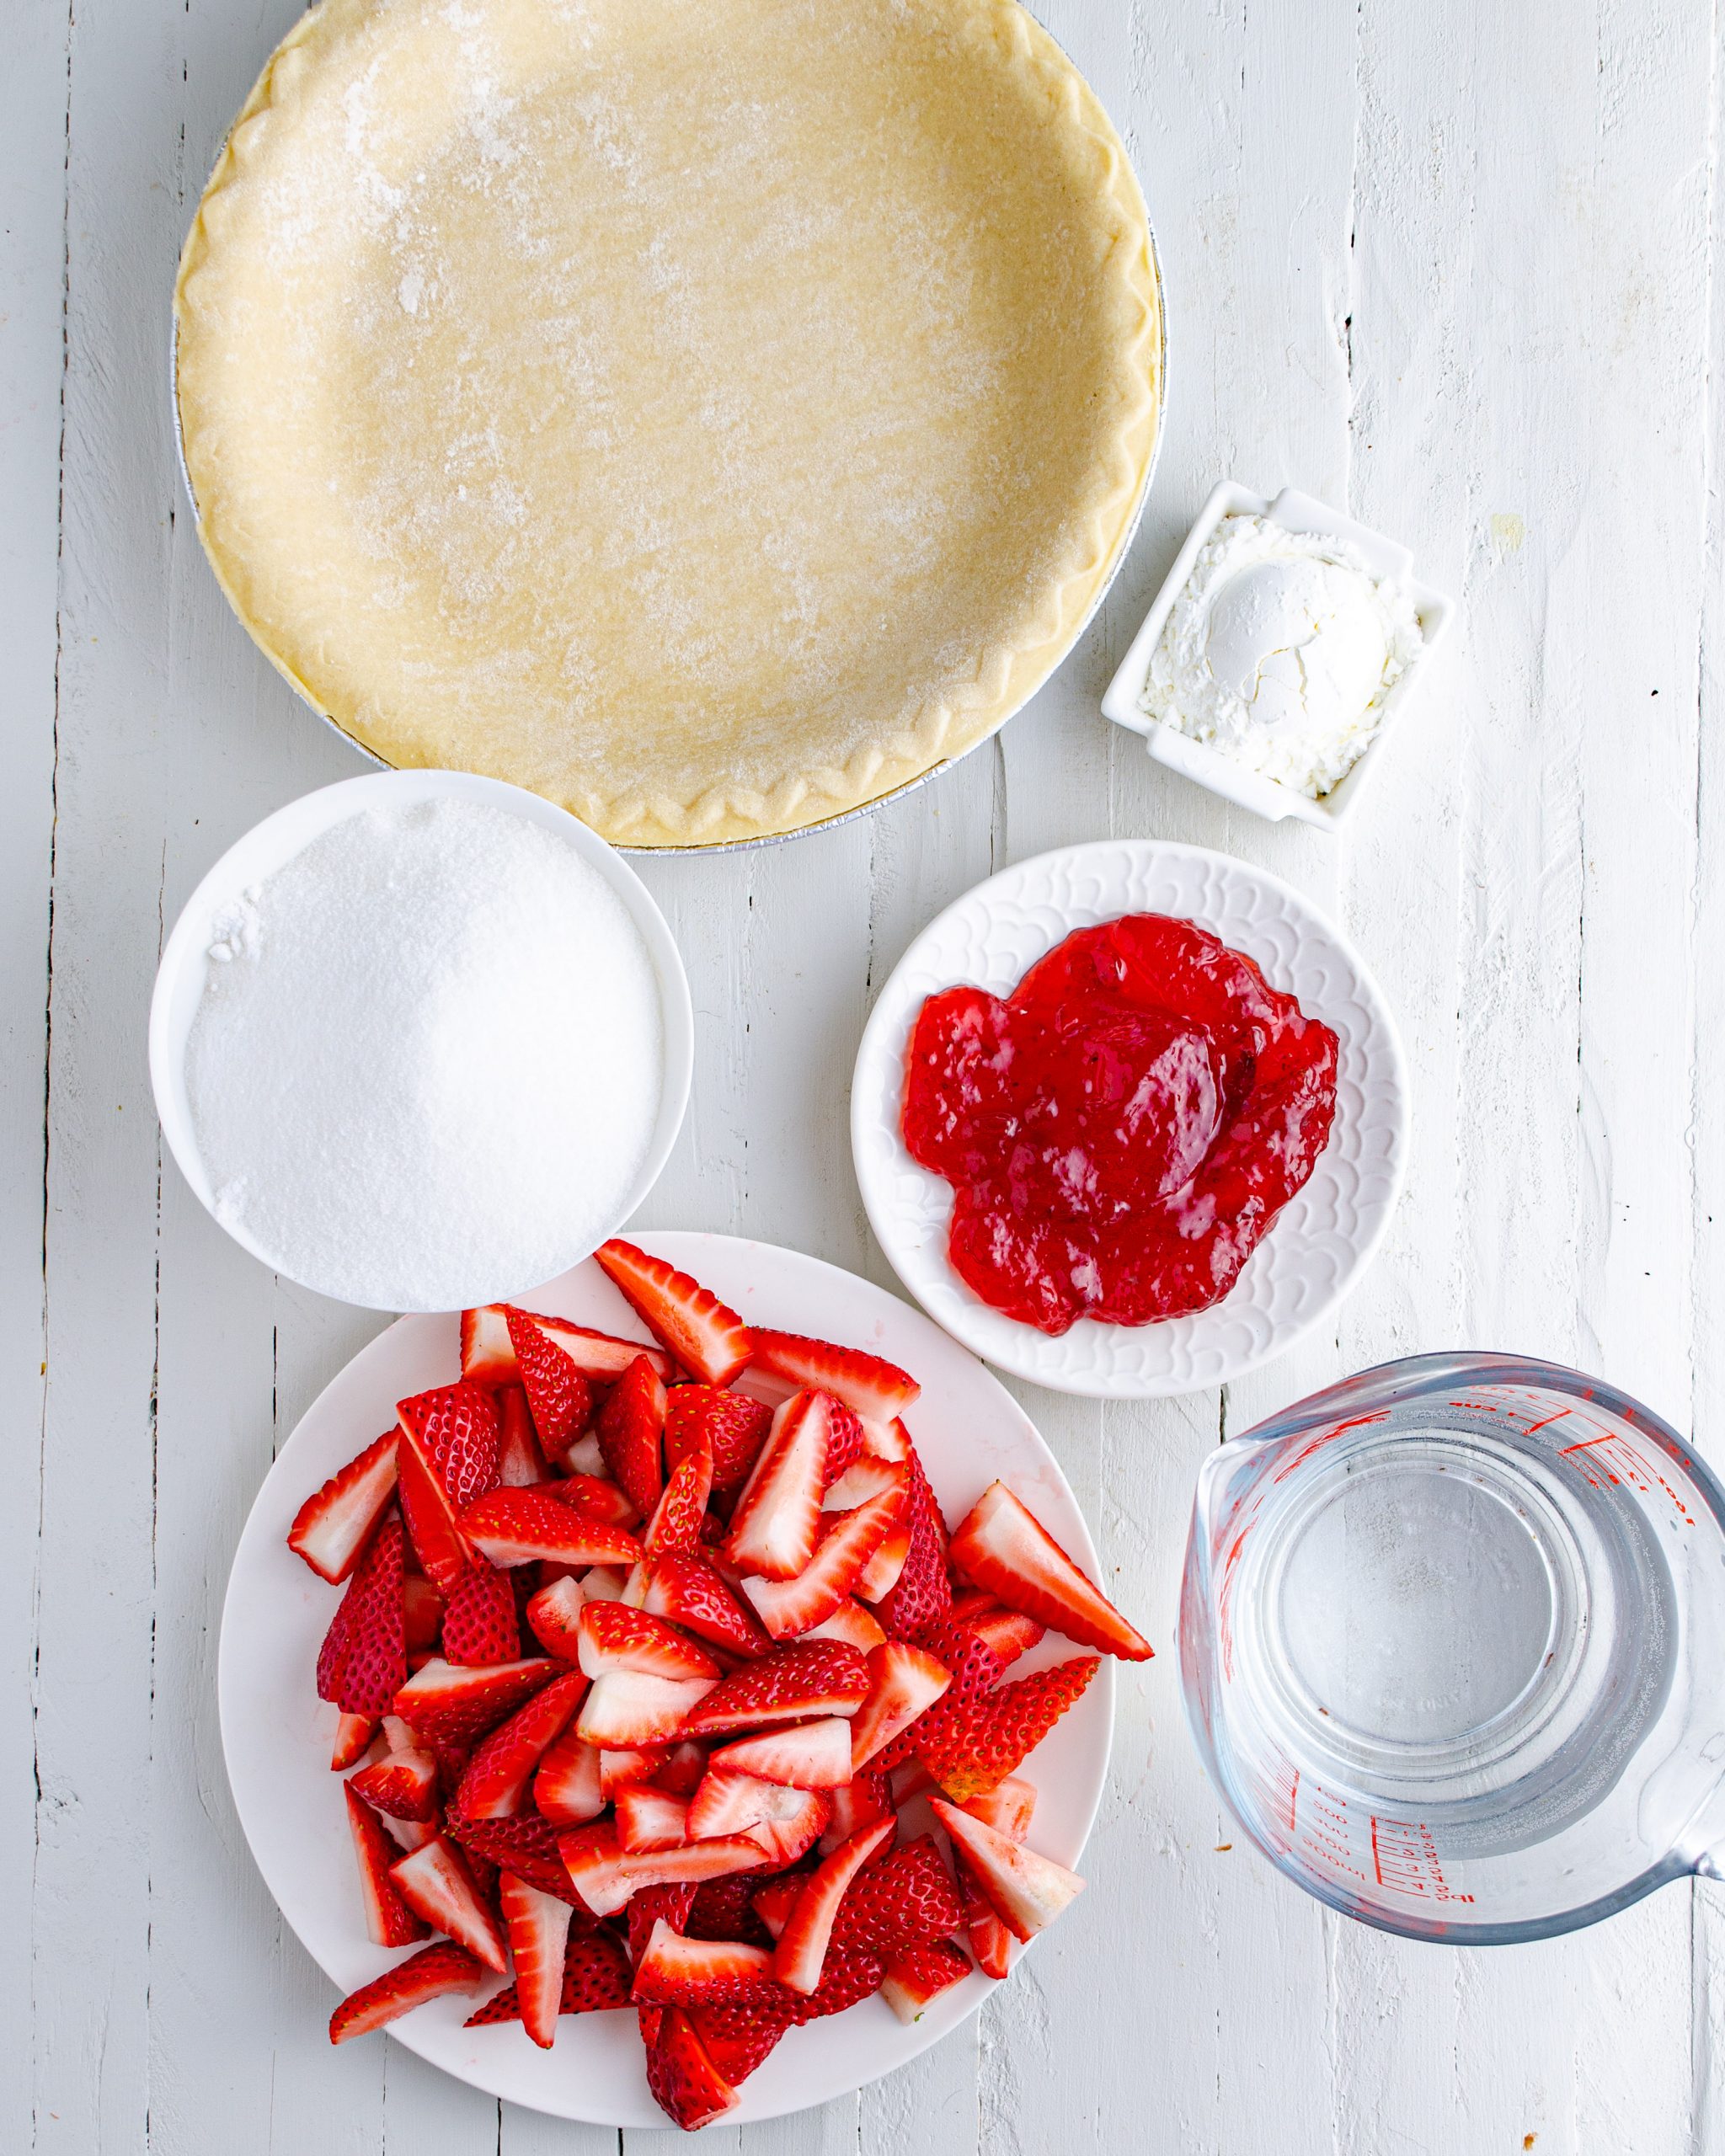 Big Boy Fresh Strawberry Pie ingredients